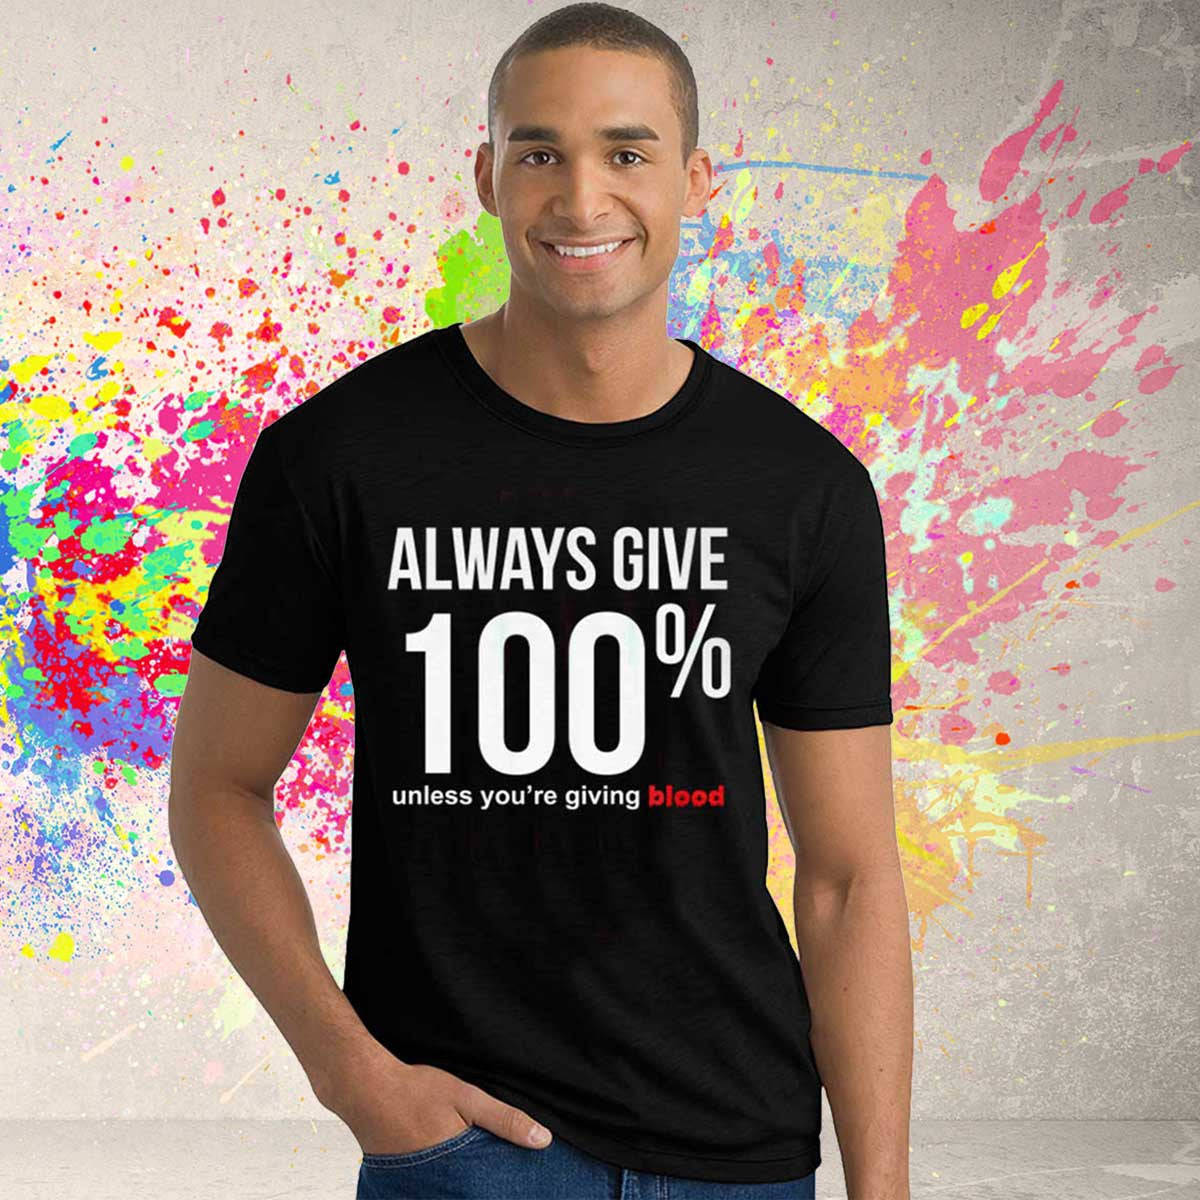 Always Give 100% T-Shirt - SouthofMemphis - 1